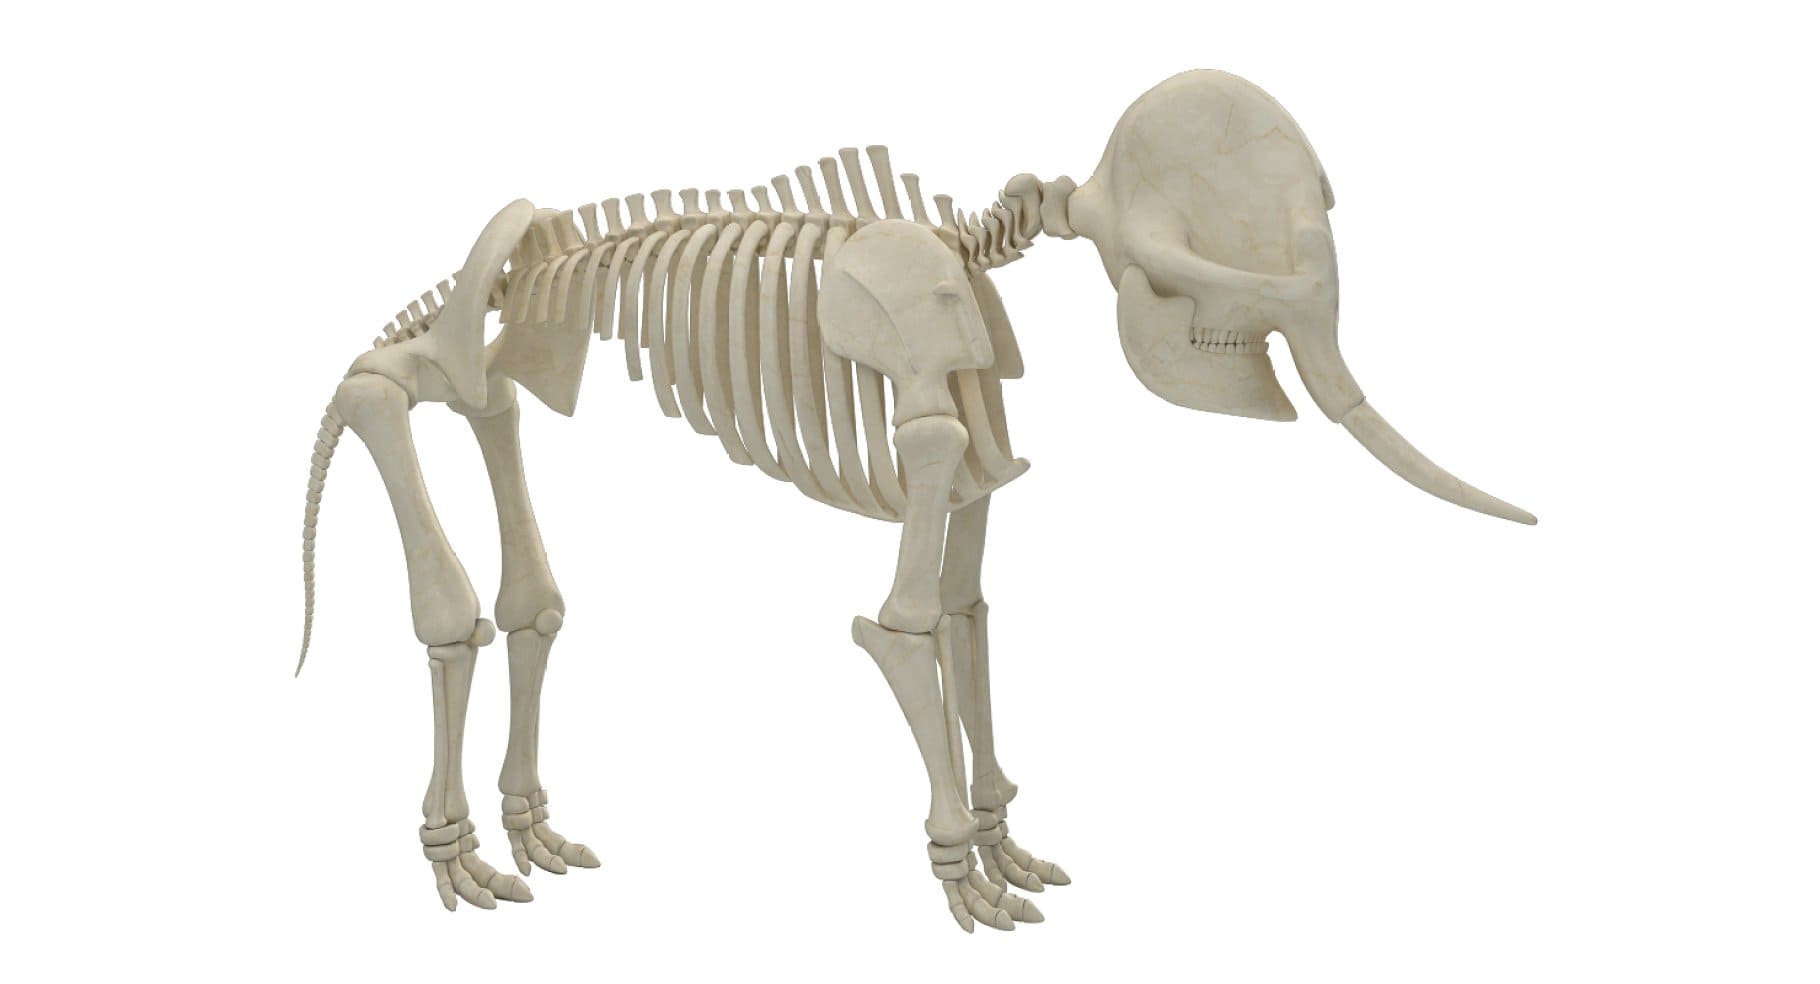 Image of huge bones in the skeleton of an elephant.